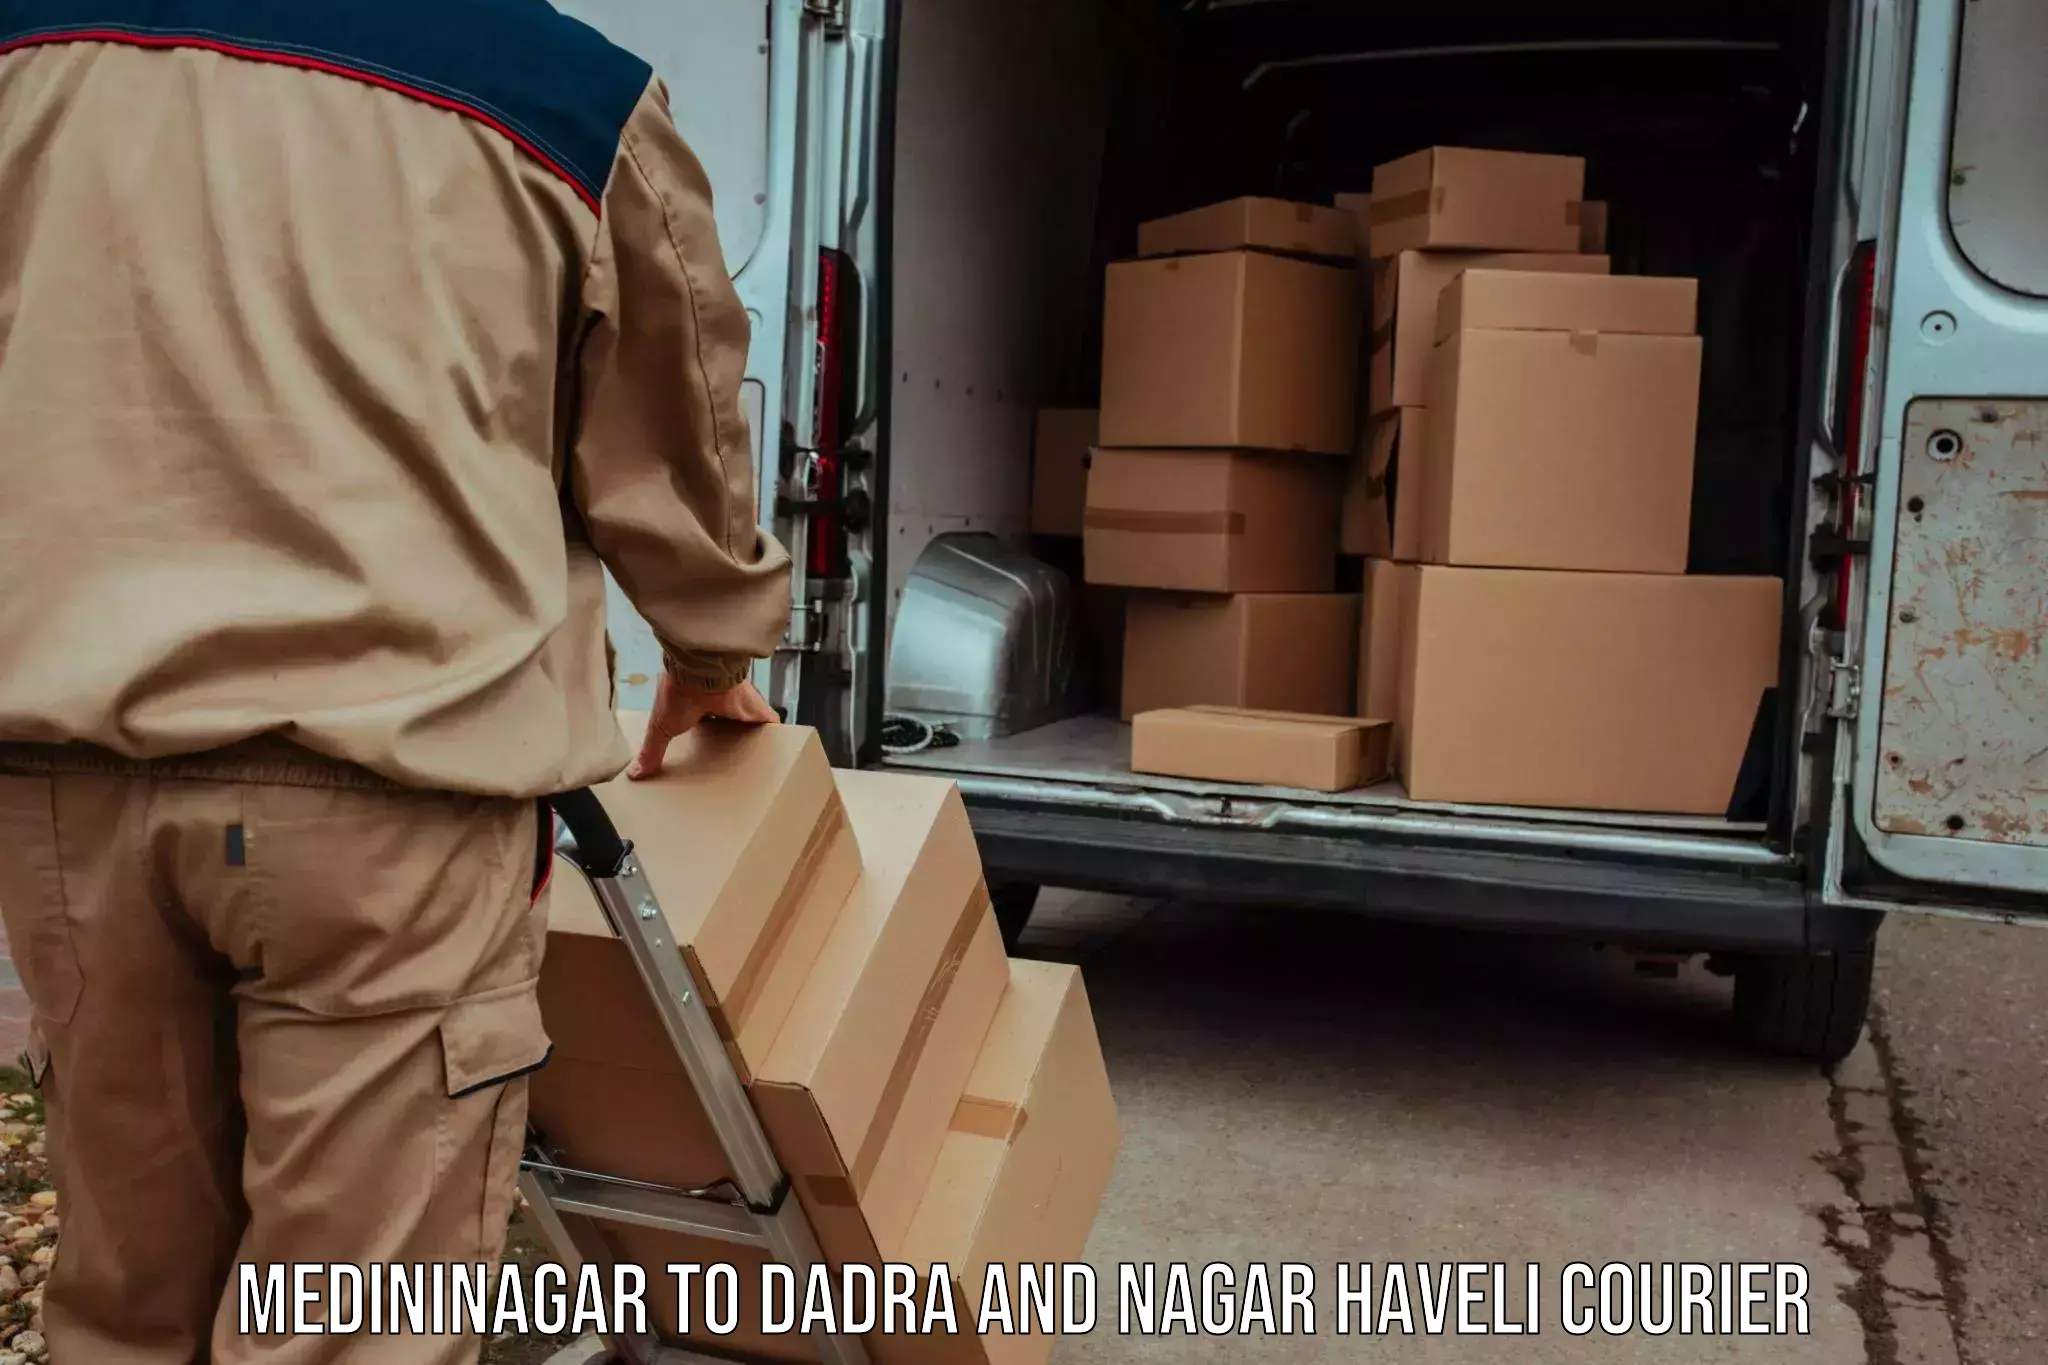 Personal parcel delivery in Medininagar to Silvassa